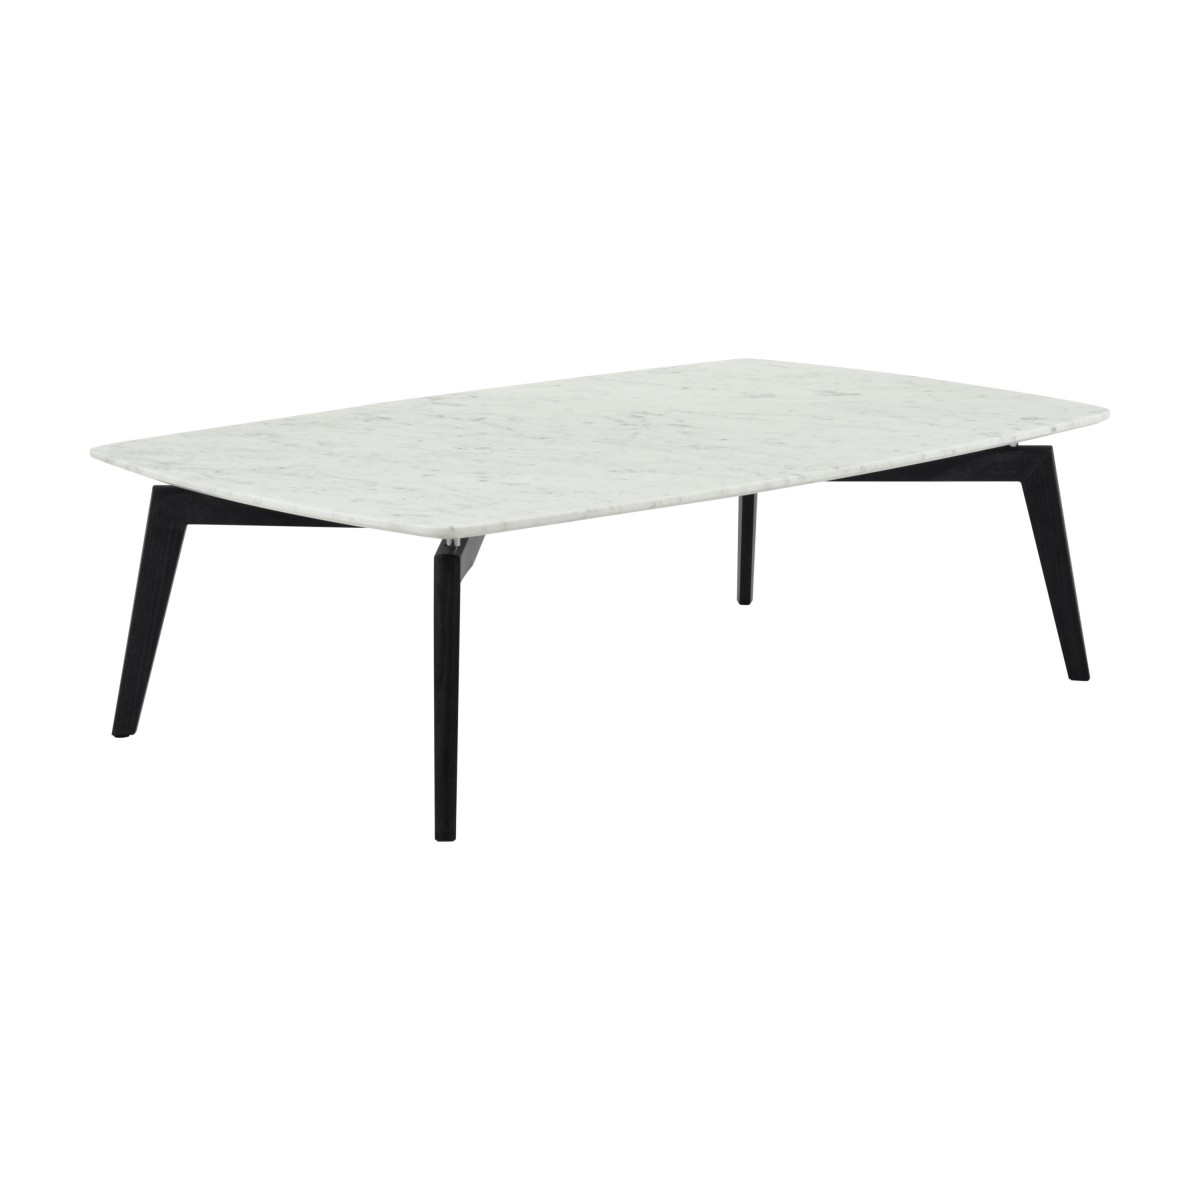 italian modern small table theo c5 6051